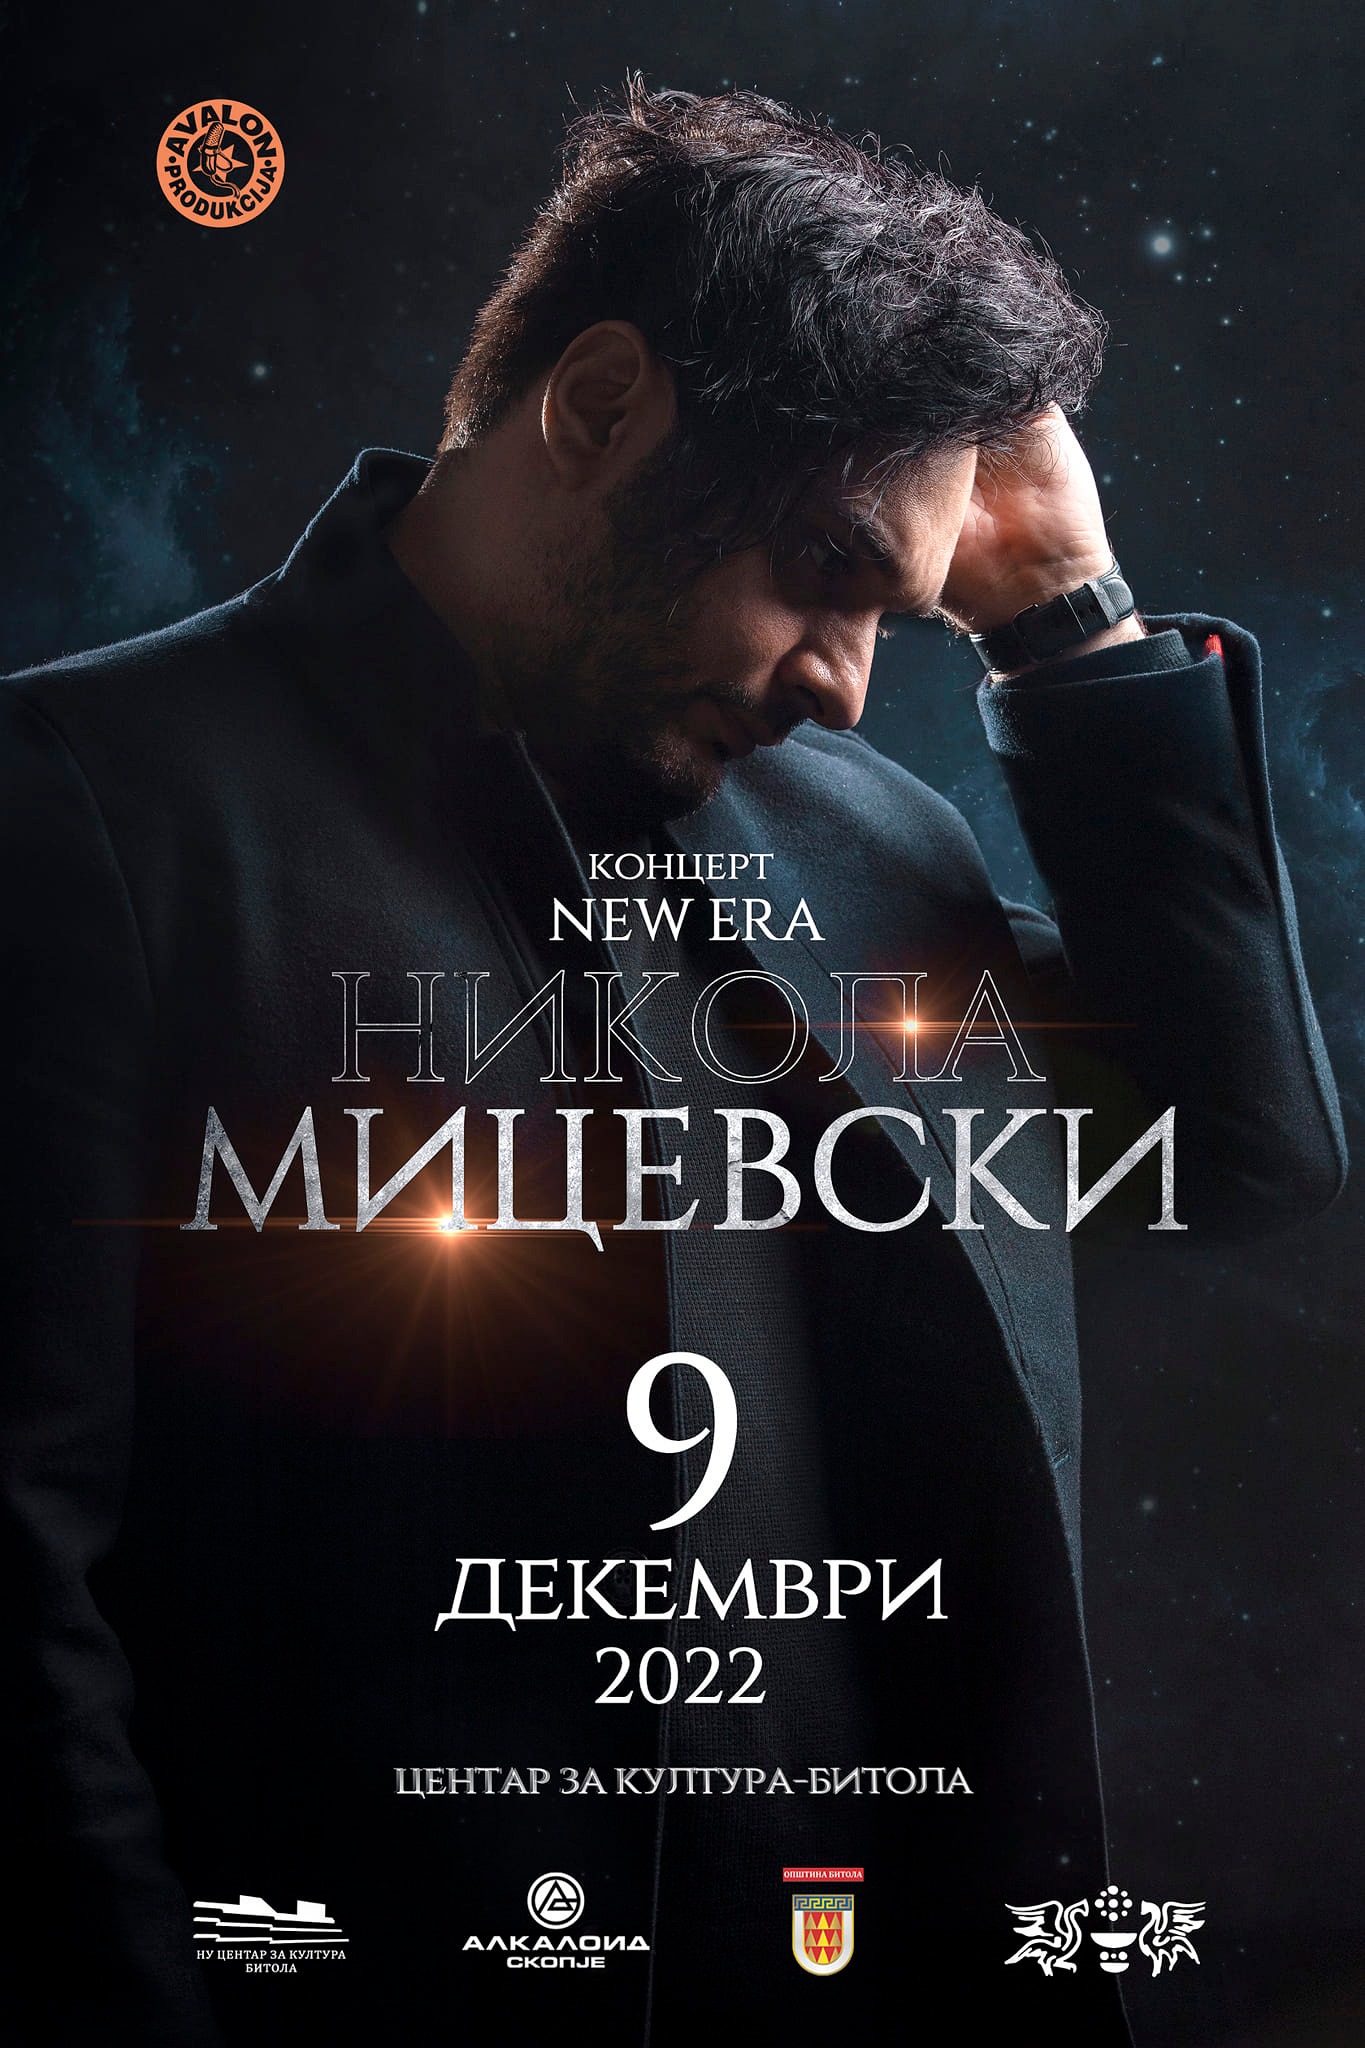 You are currently viewing Концерт “New Era” на Никола Мецевски